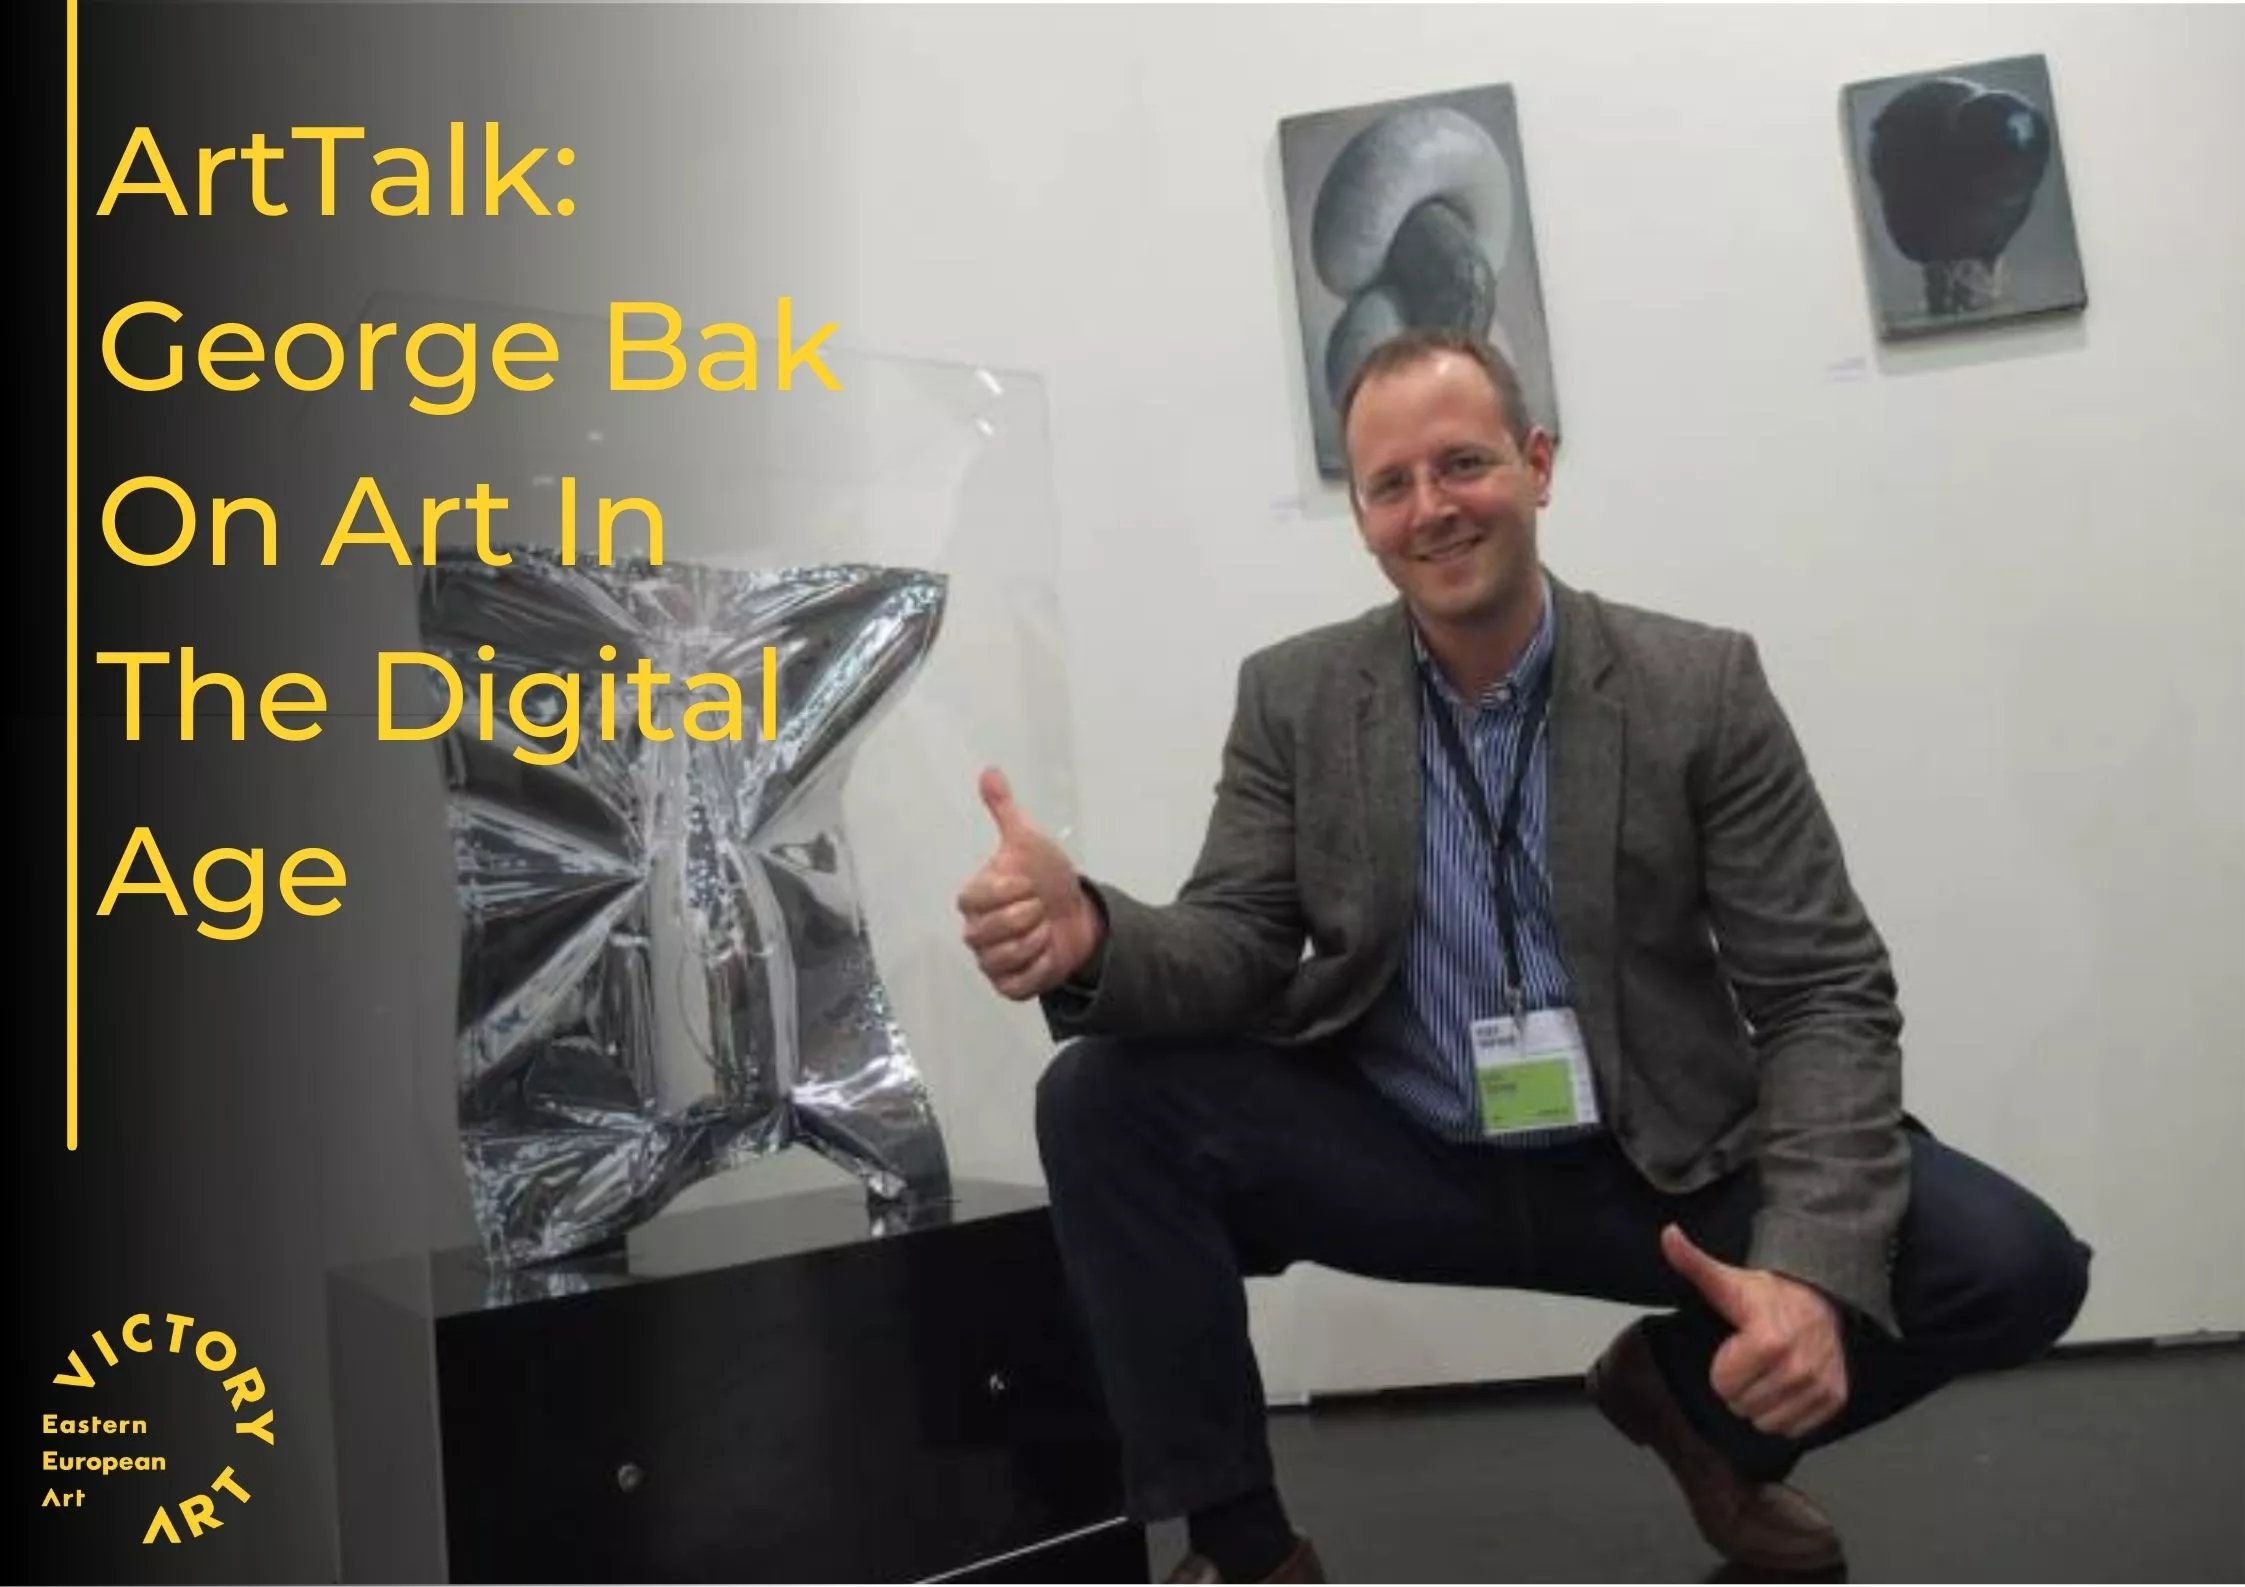 Art Talk: Georg Bak on Art In The Digital Age